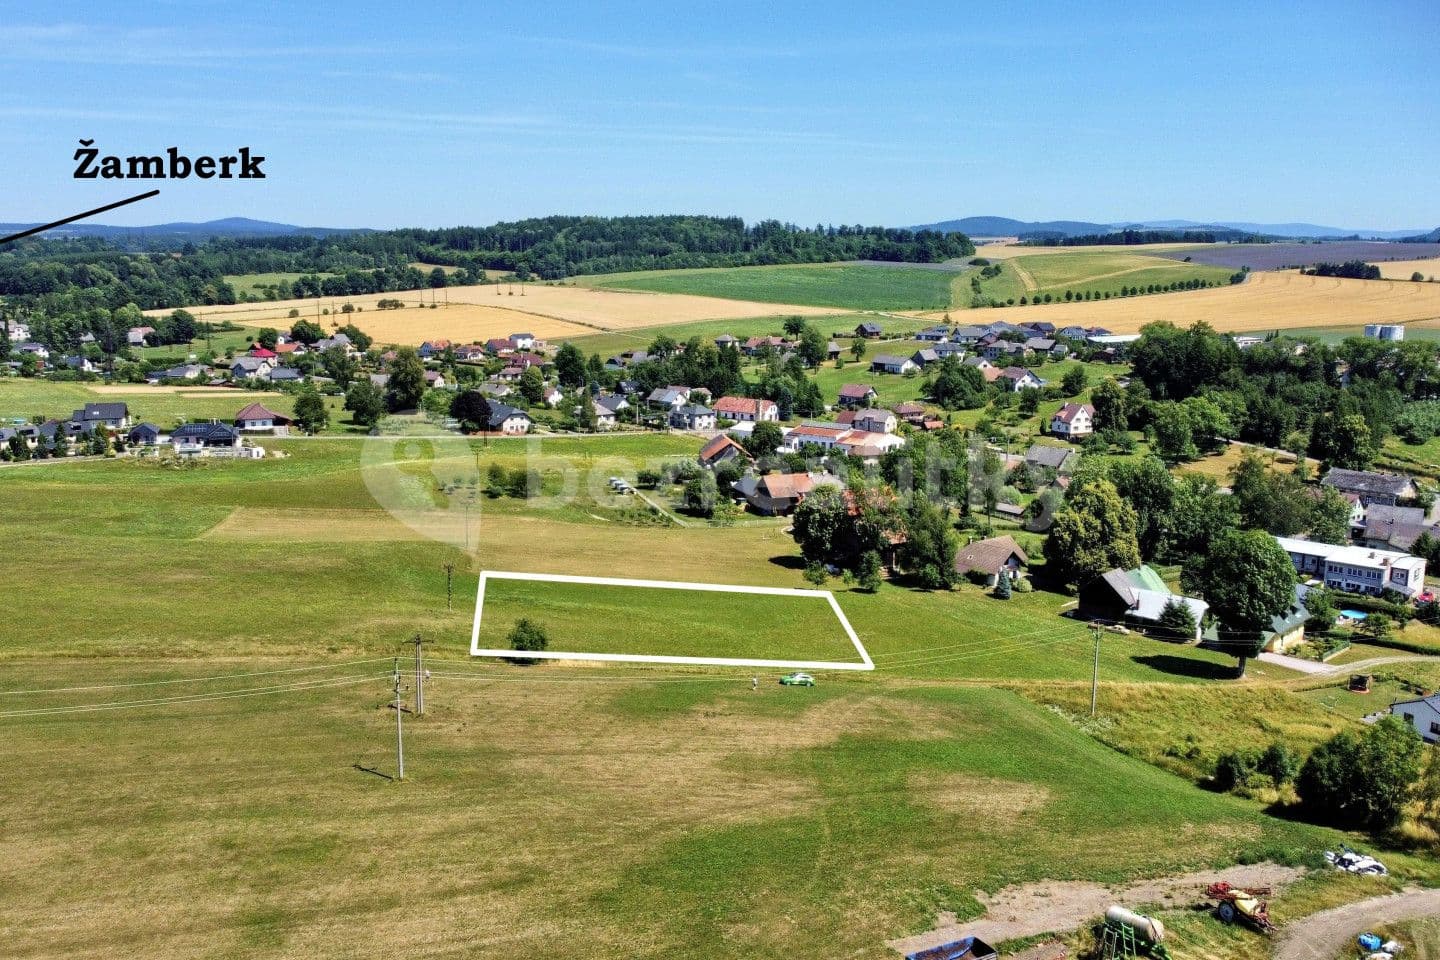 plot for sale, 3,500 m², Lukavice, Pardubický Region